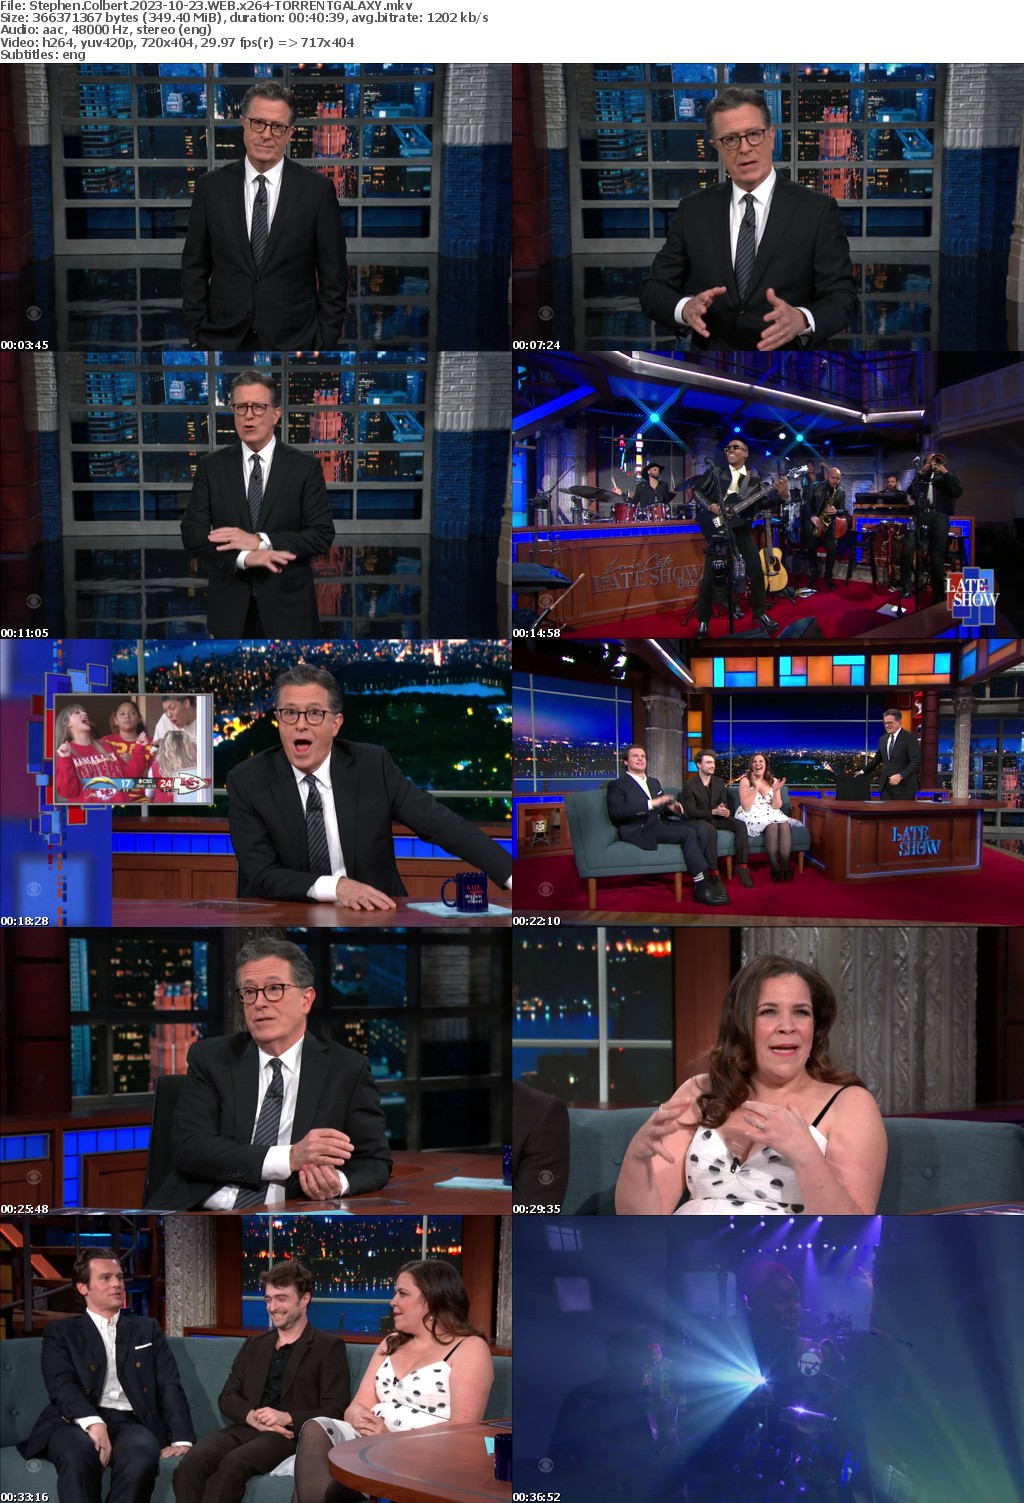 Stephen Colbert 2023-10-23 WEB x264-GALAXY